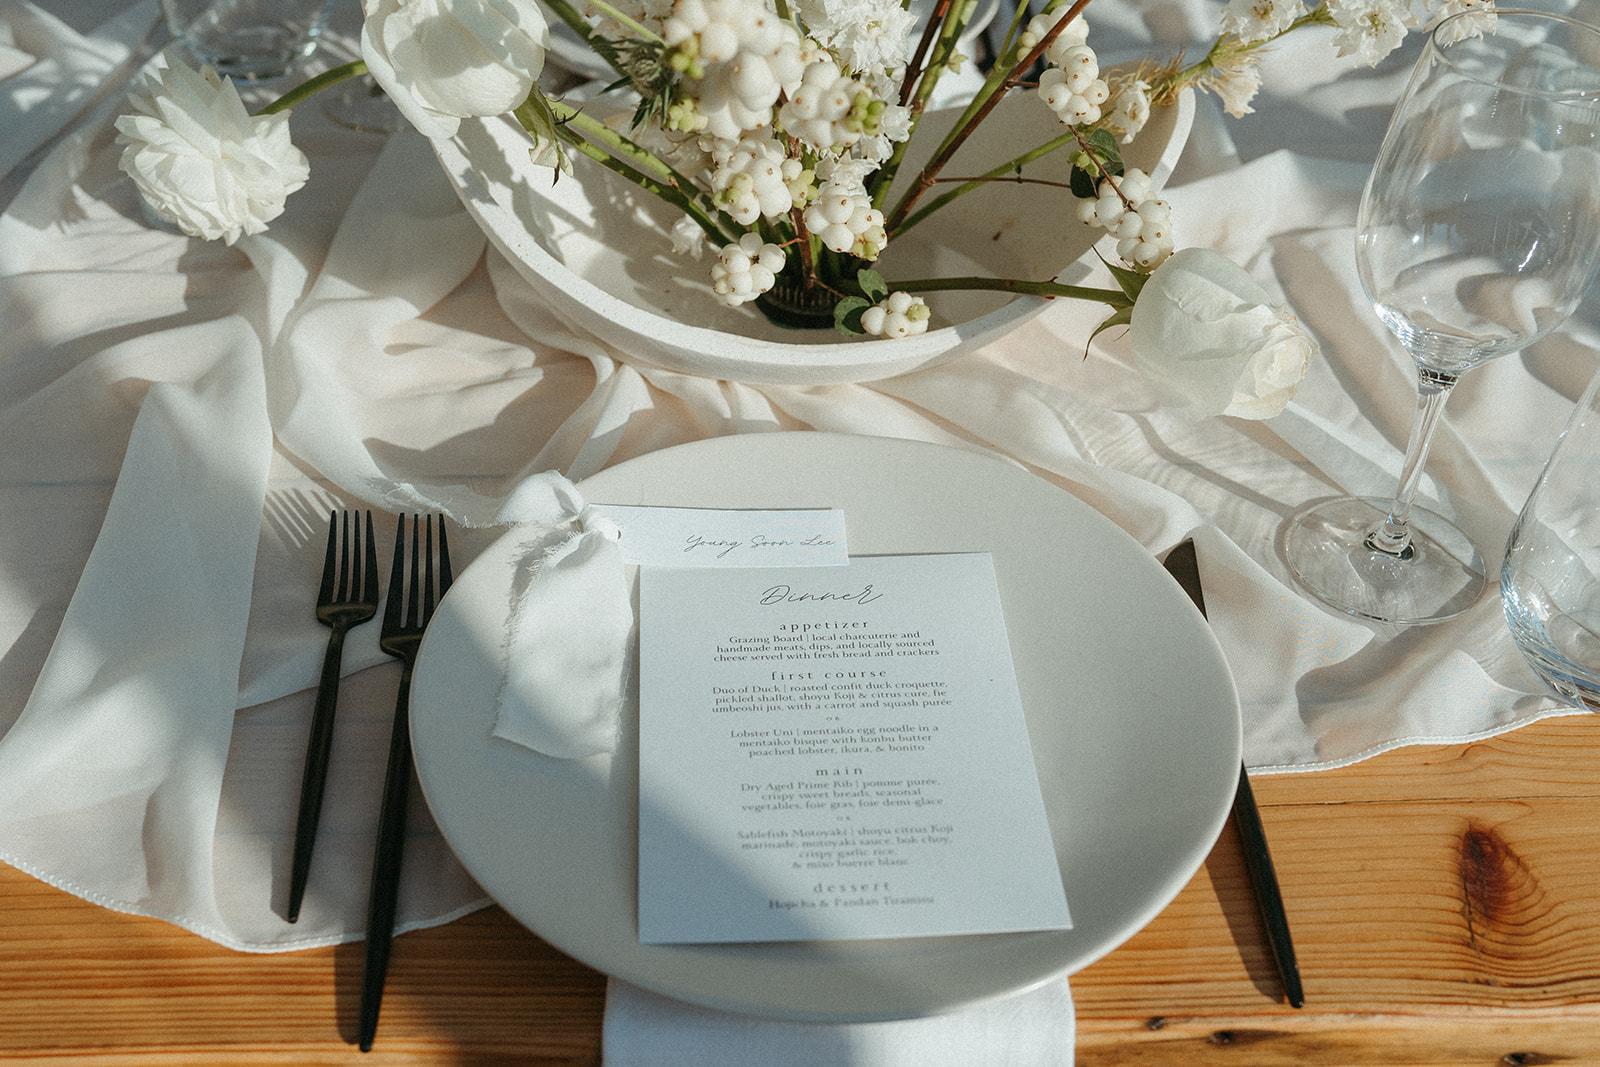 Greenhouse wedding, outdoor wedding, intimate wedding inspiration, table setting, classic wedding inspiration 